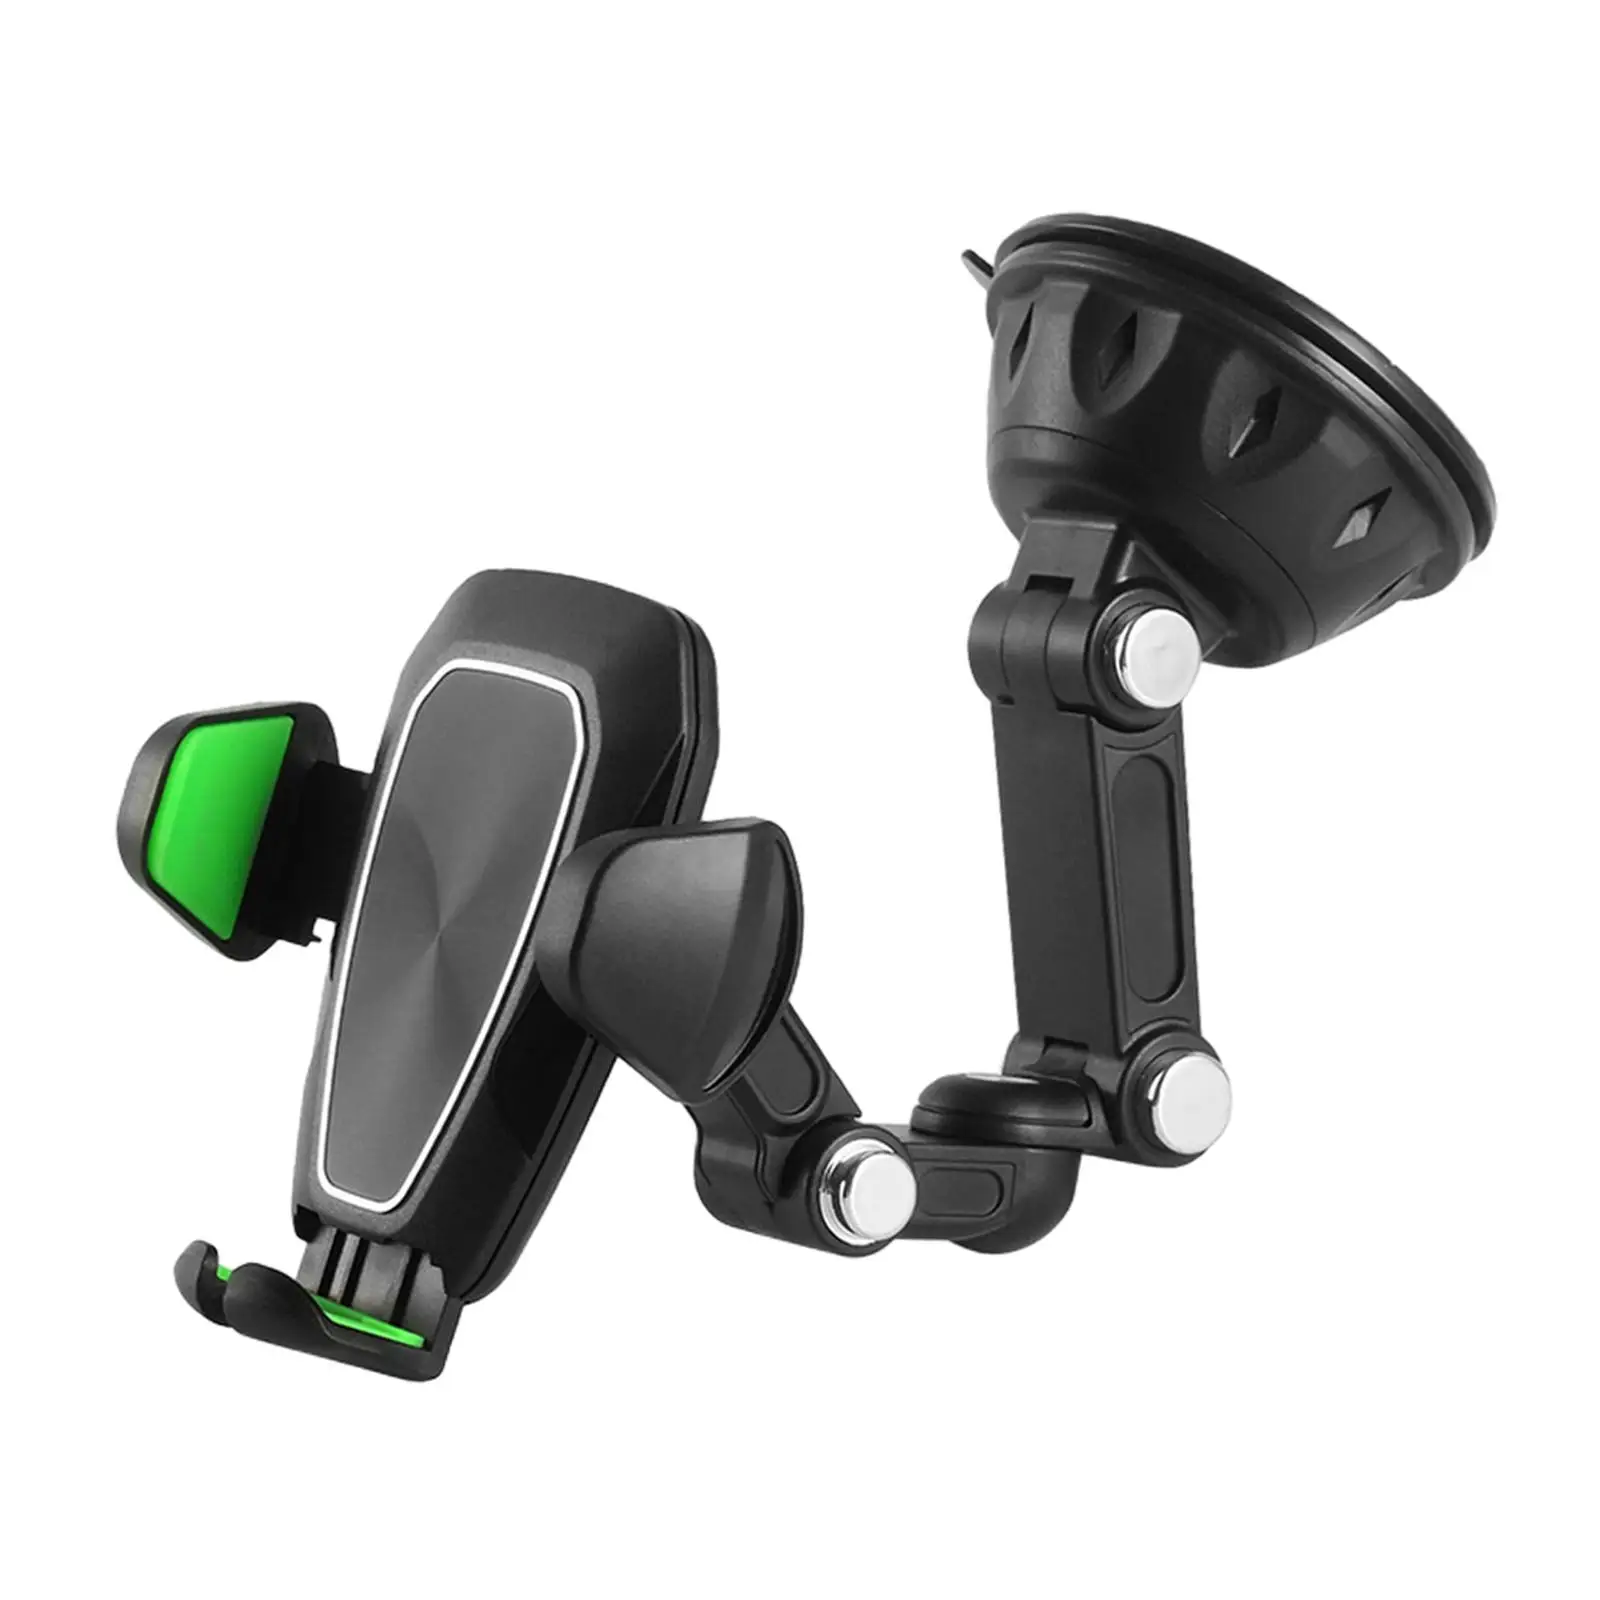 Phone Mount Telescopic Arm Universal Car Accessories Sturdy Non Slip Mobile Phone Bracket Car Phone Mount for Car Dashboard